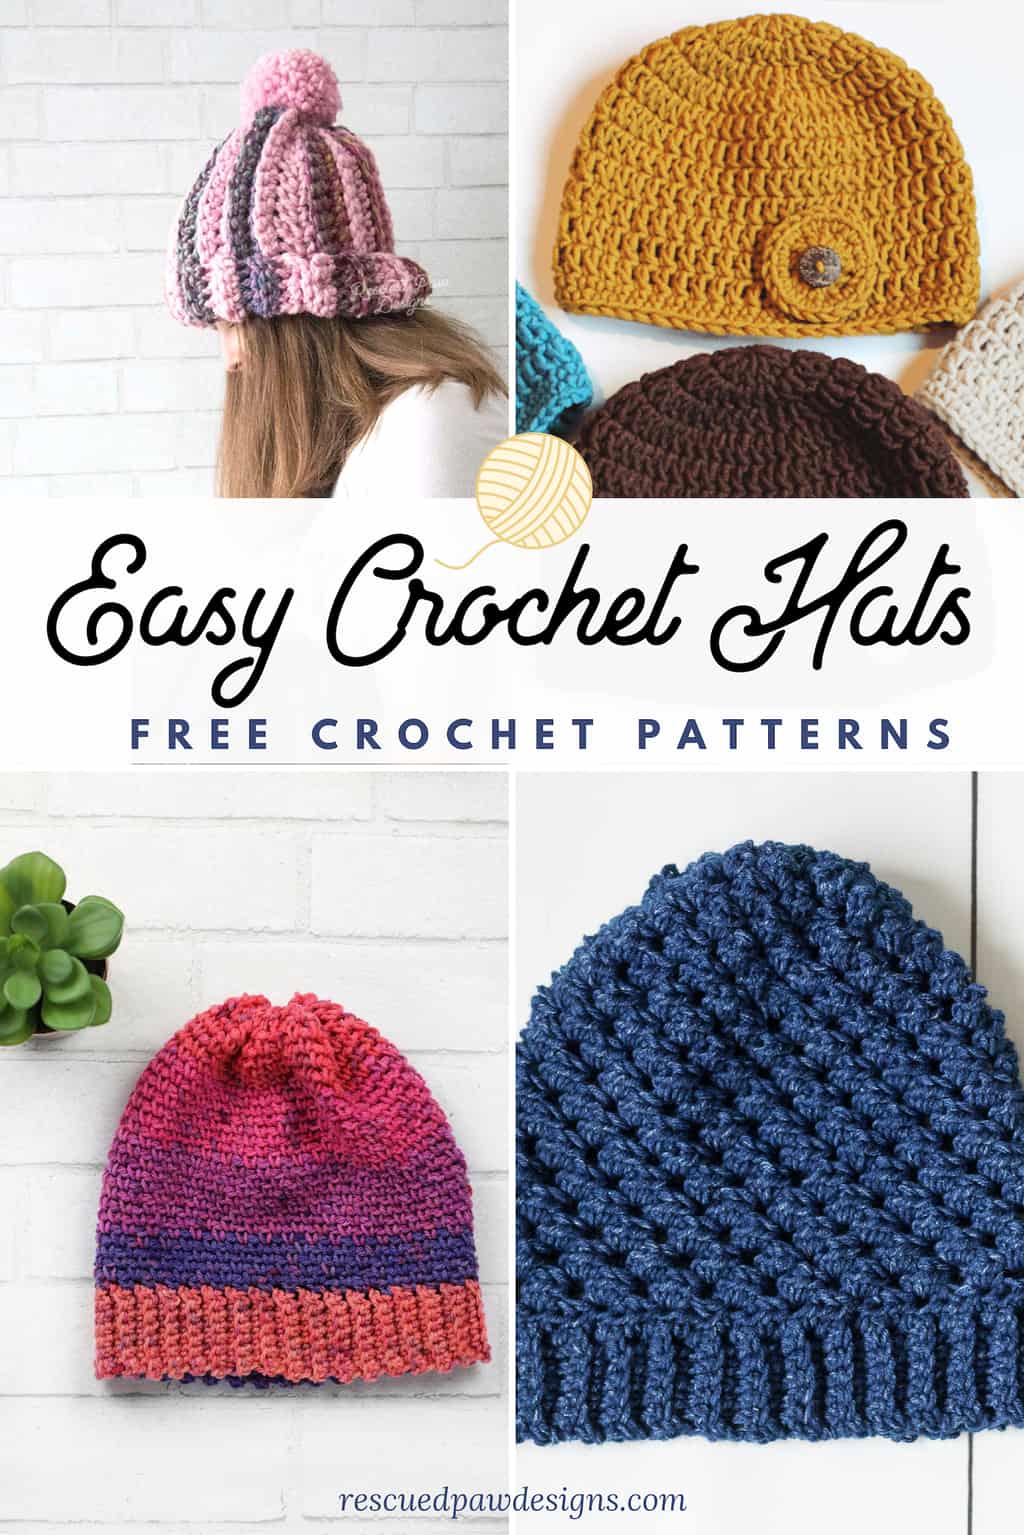 6 Easy Crochet Hat Patterns for Beginners - Easy Crochet Patterns